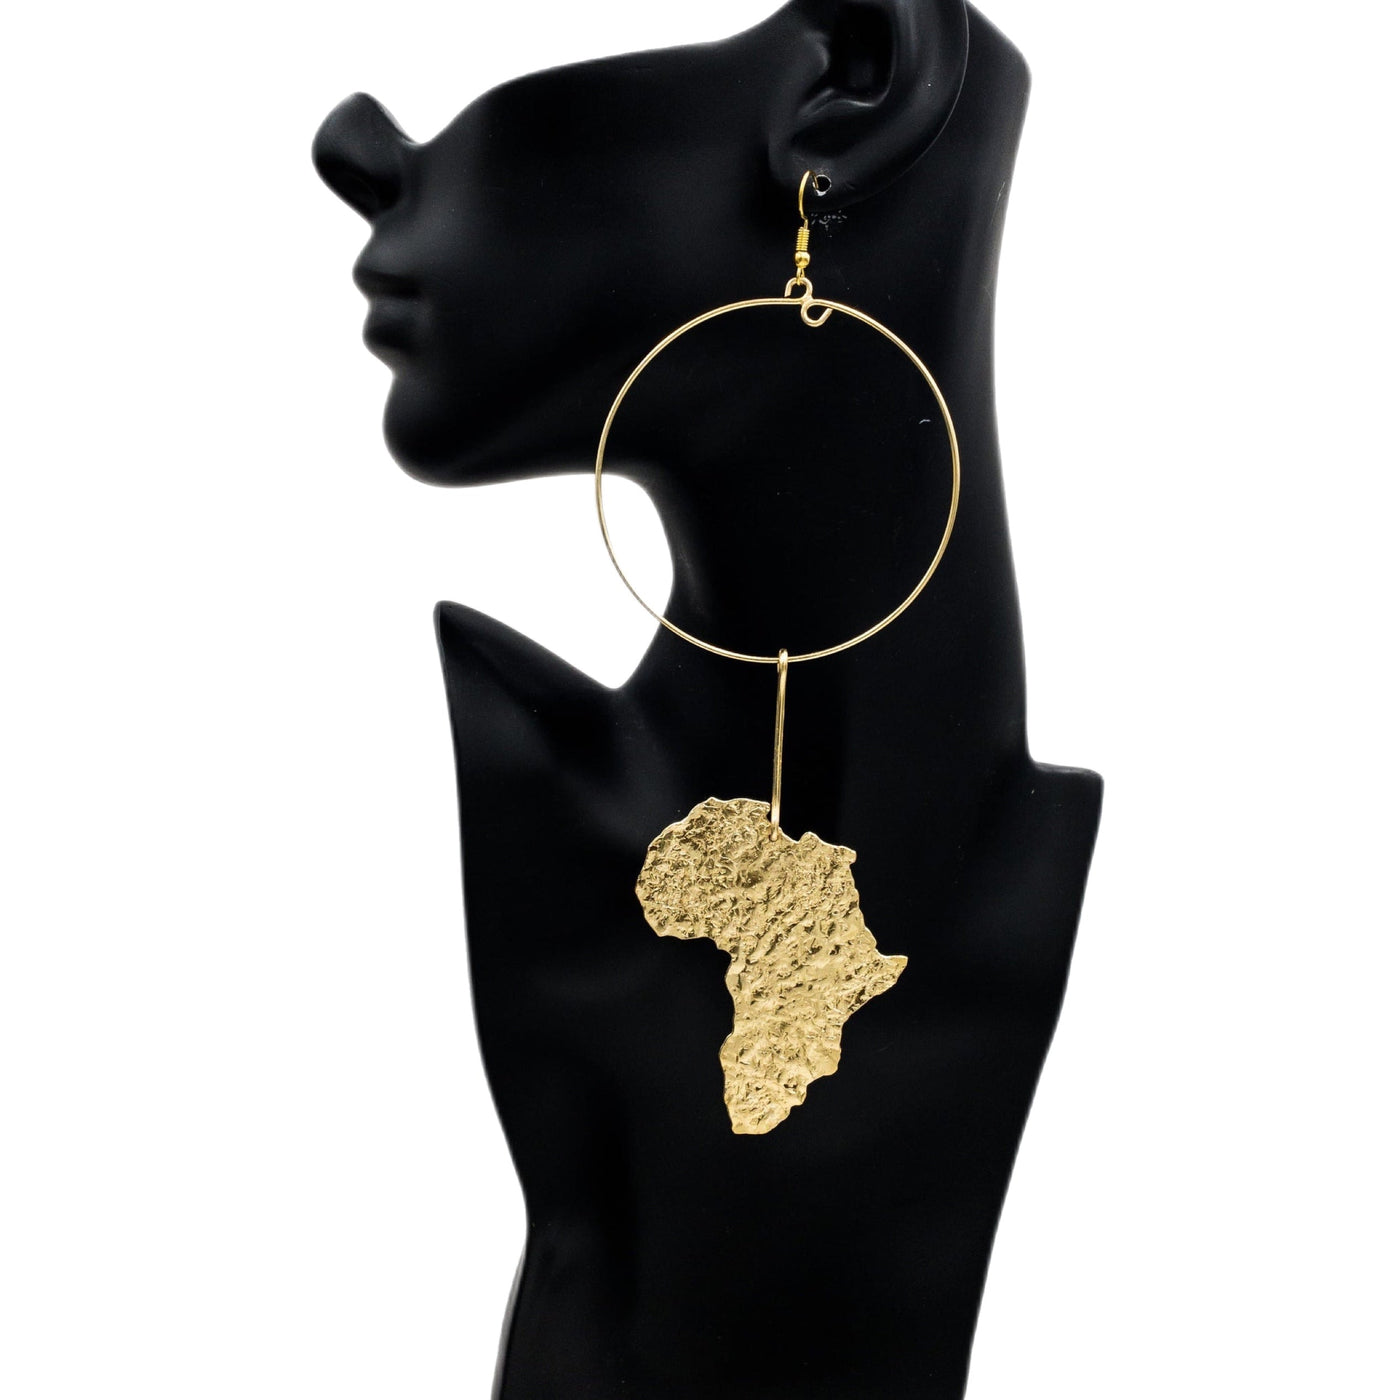 Mansa hoop and Motherland Map earrings